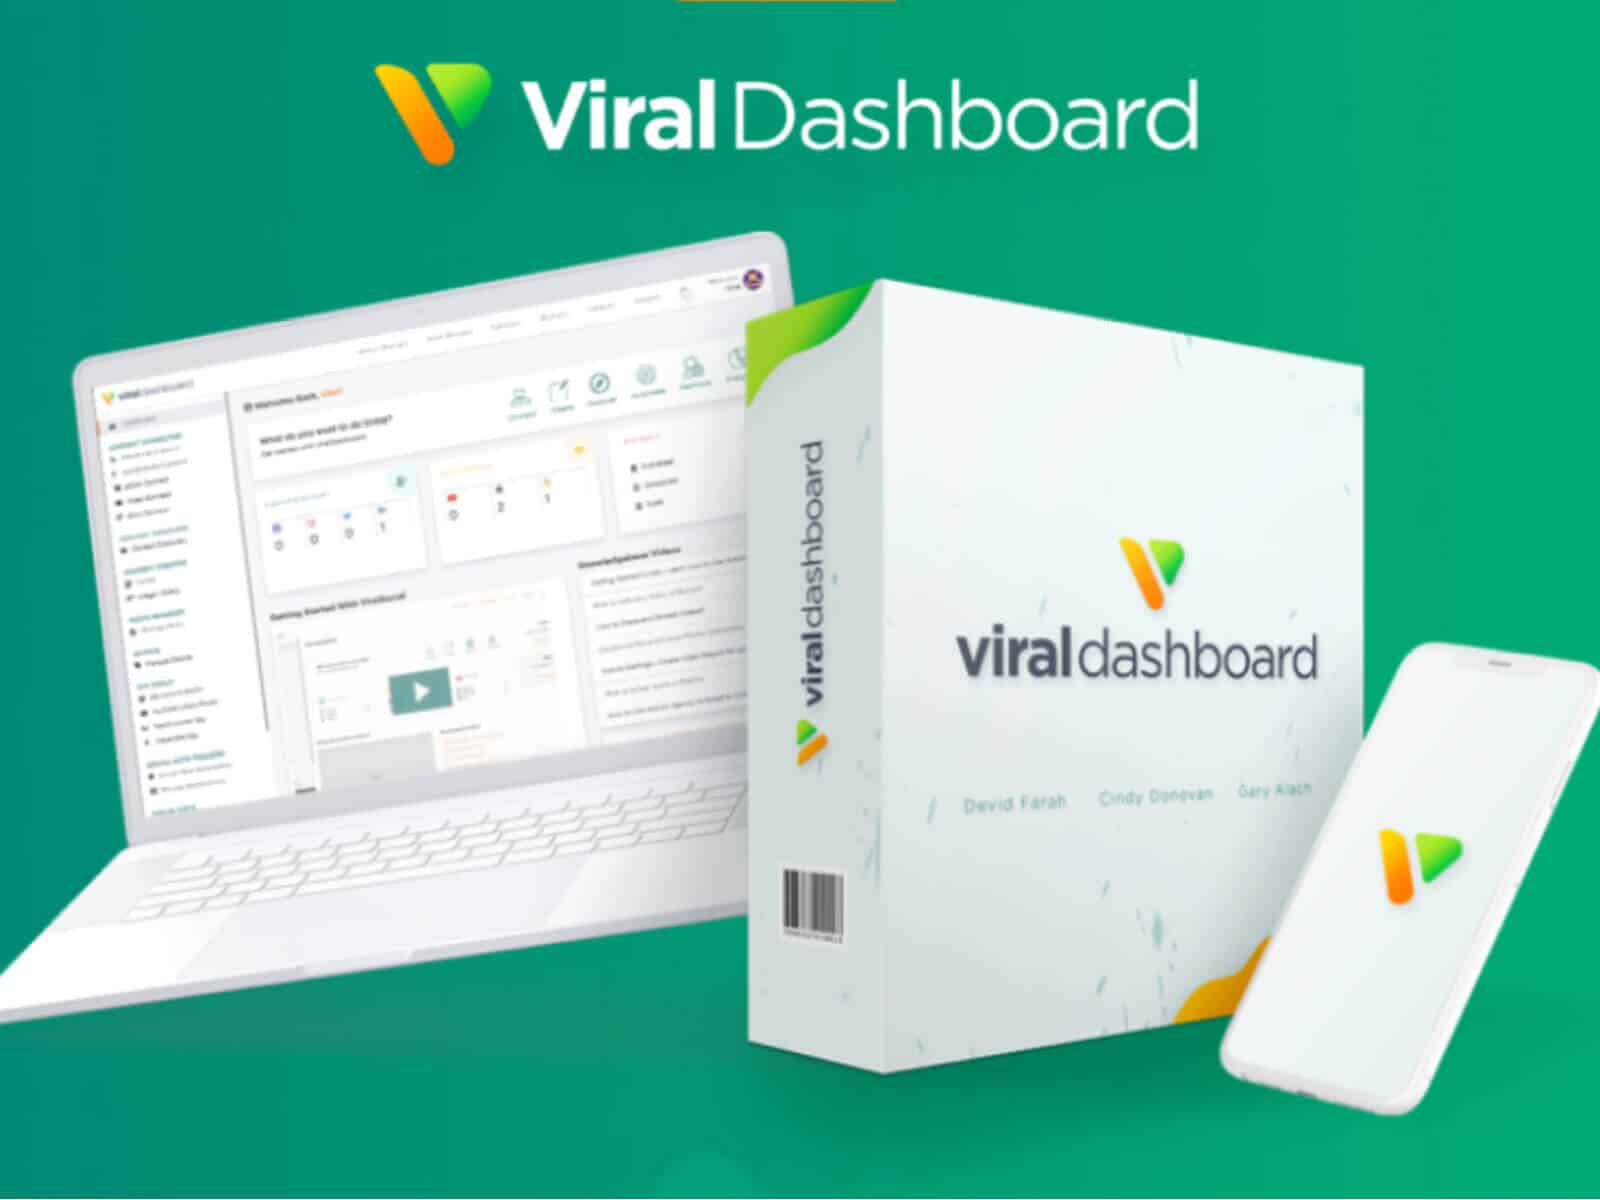 viraldashboard software